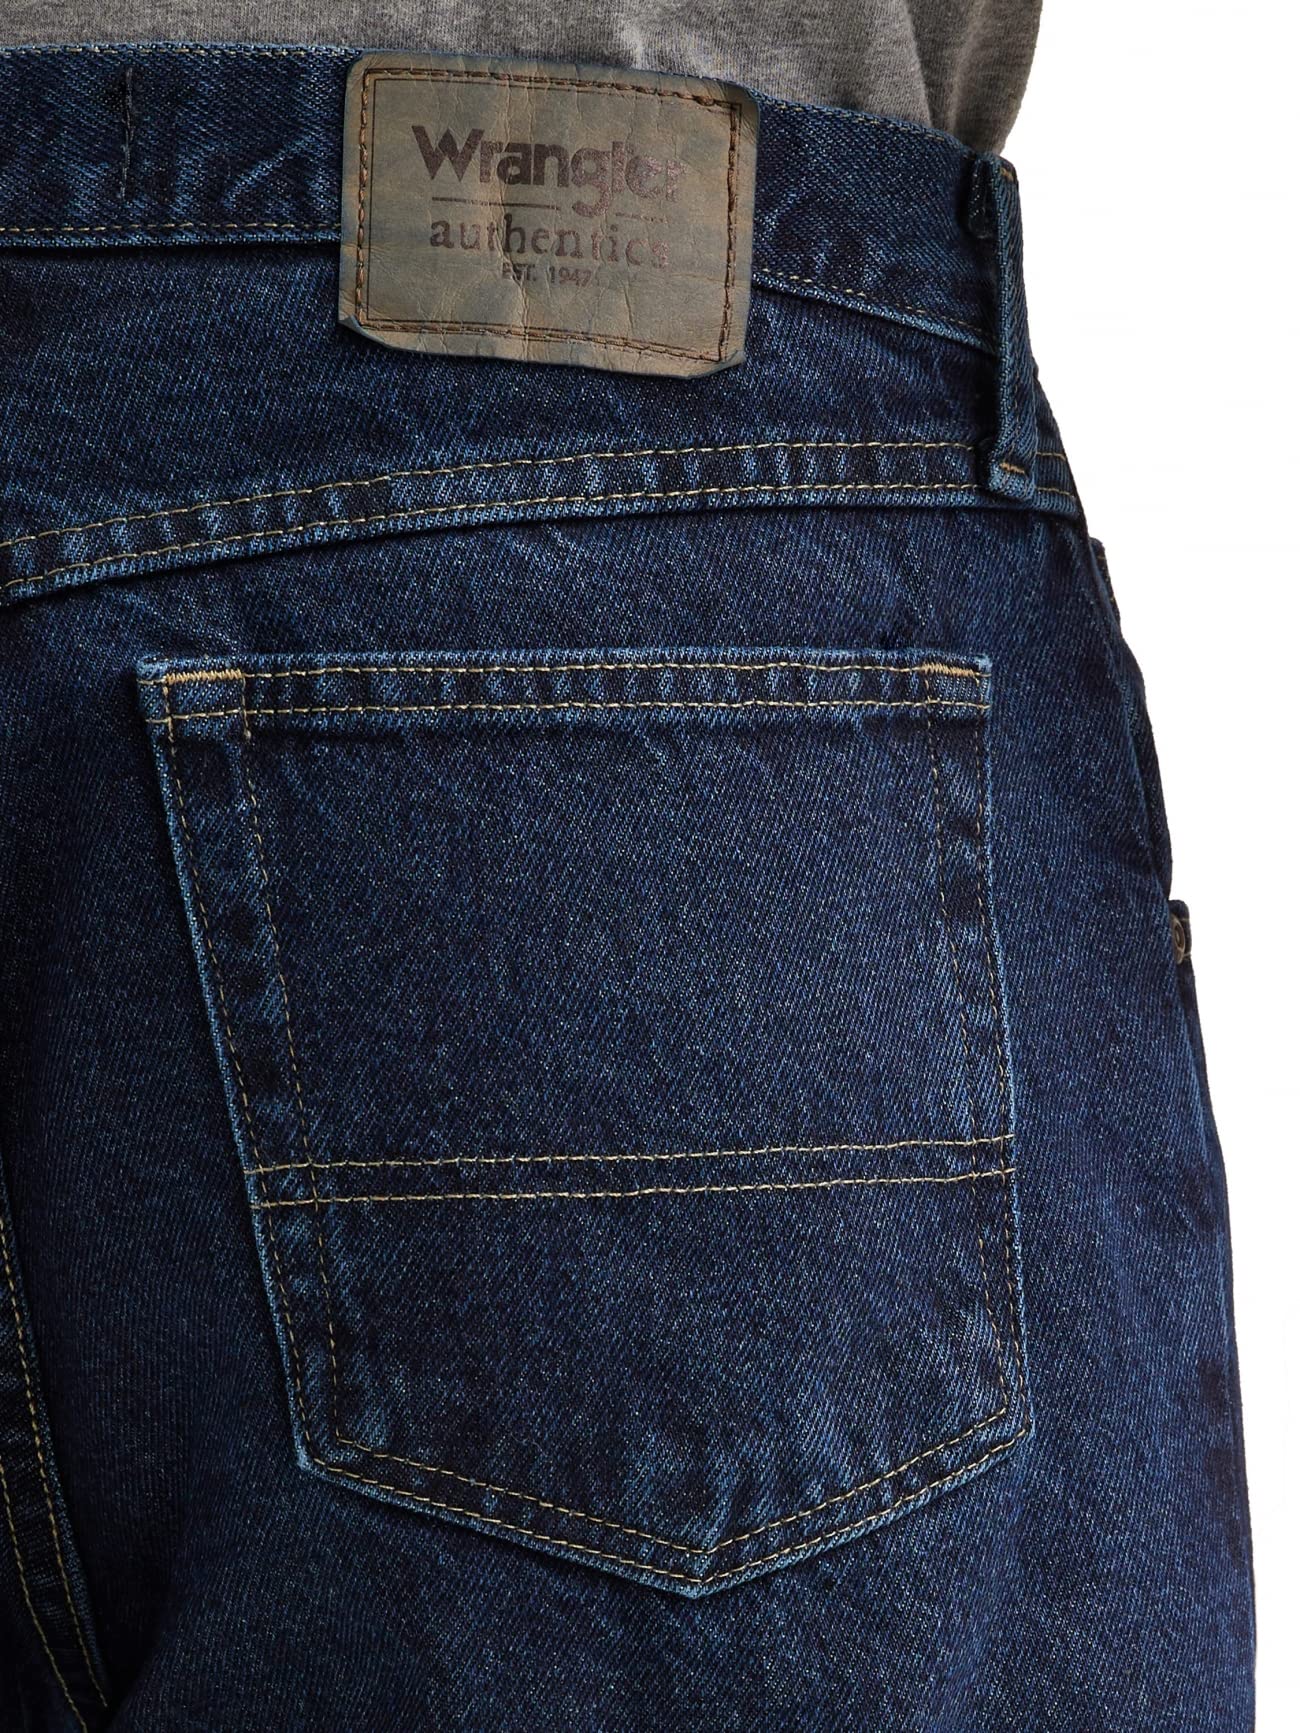 Wrangler Authentics Men's Classic 5-Pocket Relaxed Fit Cotton Jean, Dark Rinse, 35W X 29L